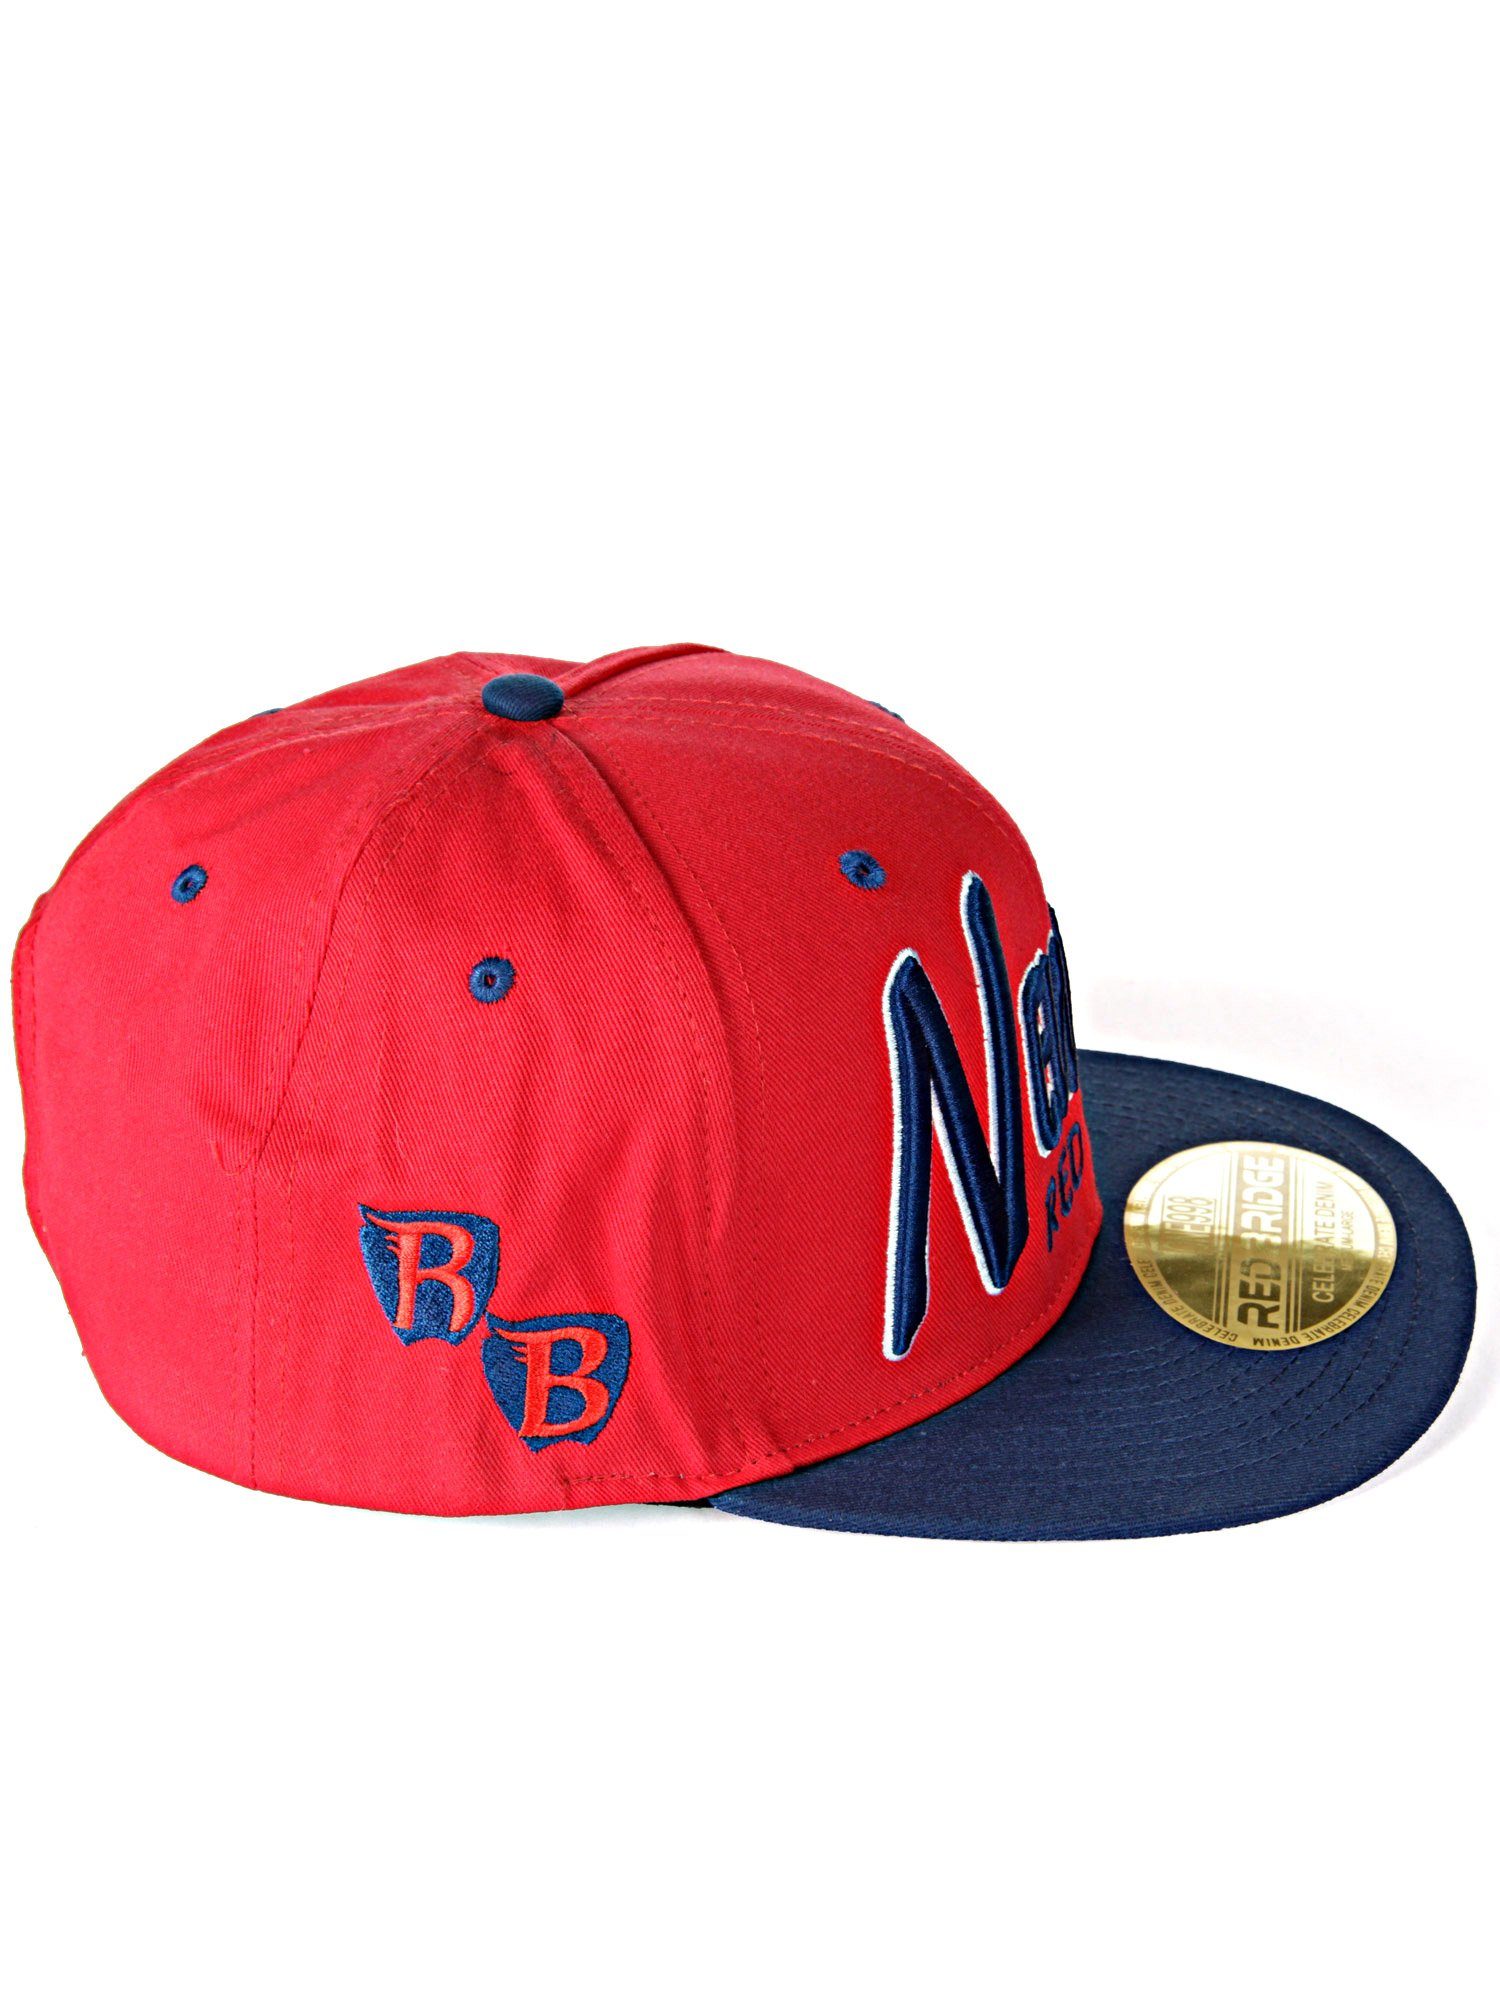 RedBridge Baseball Cap Schirm dunkelblau-rot kontrastfarbigem mit Bootle